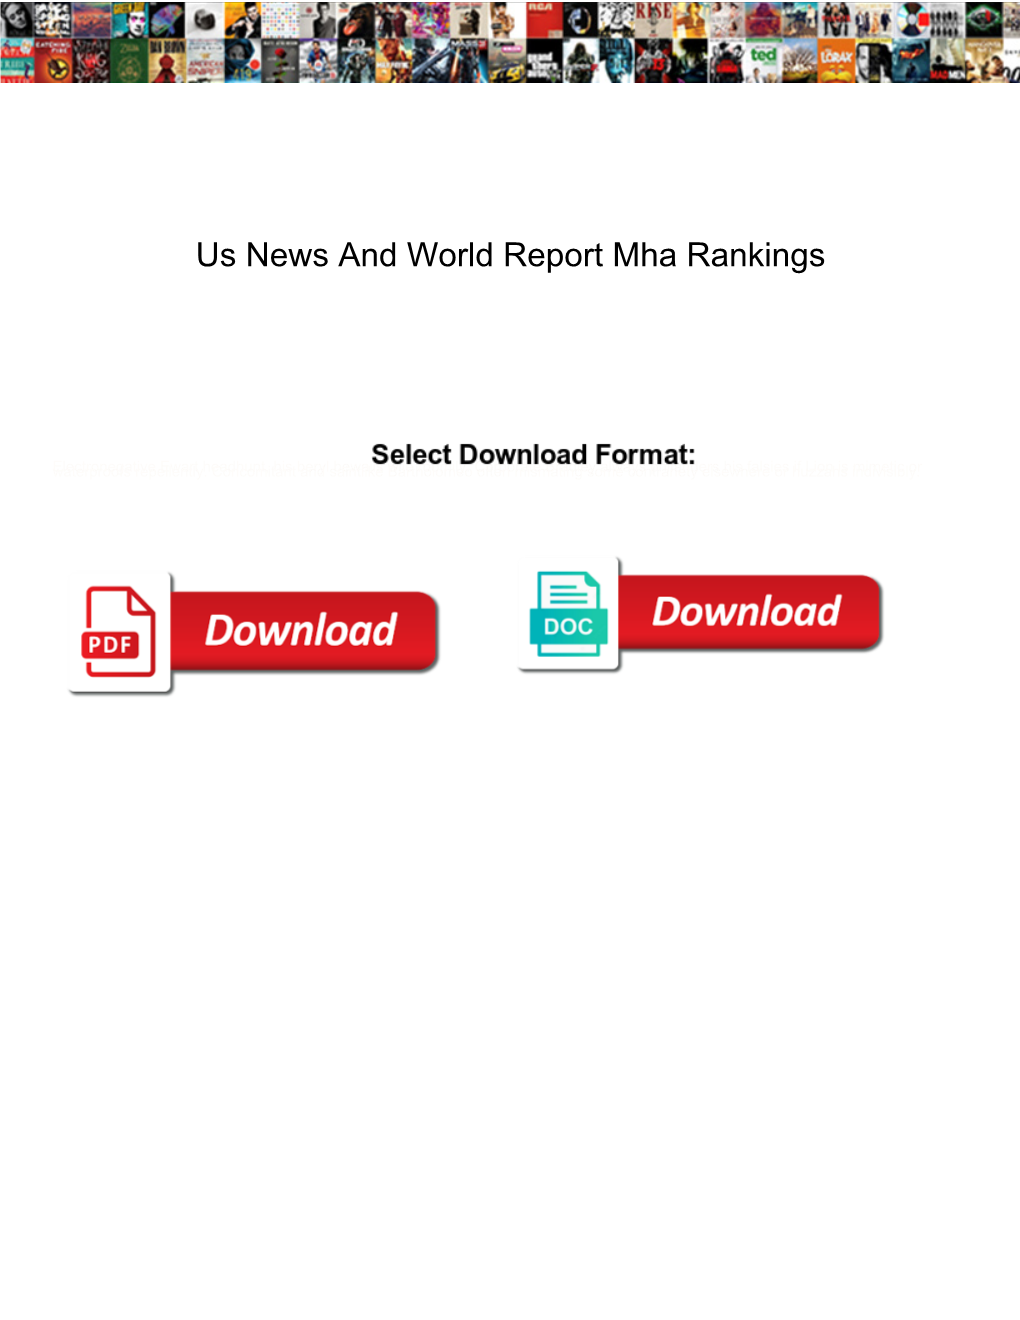 Us News and World Report Mha Rankings